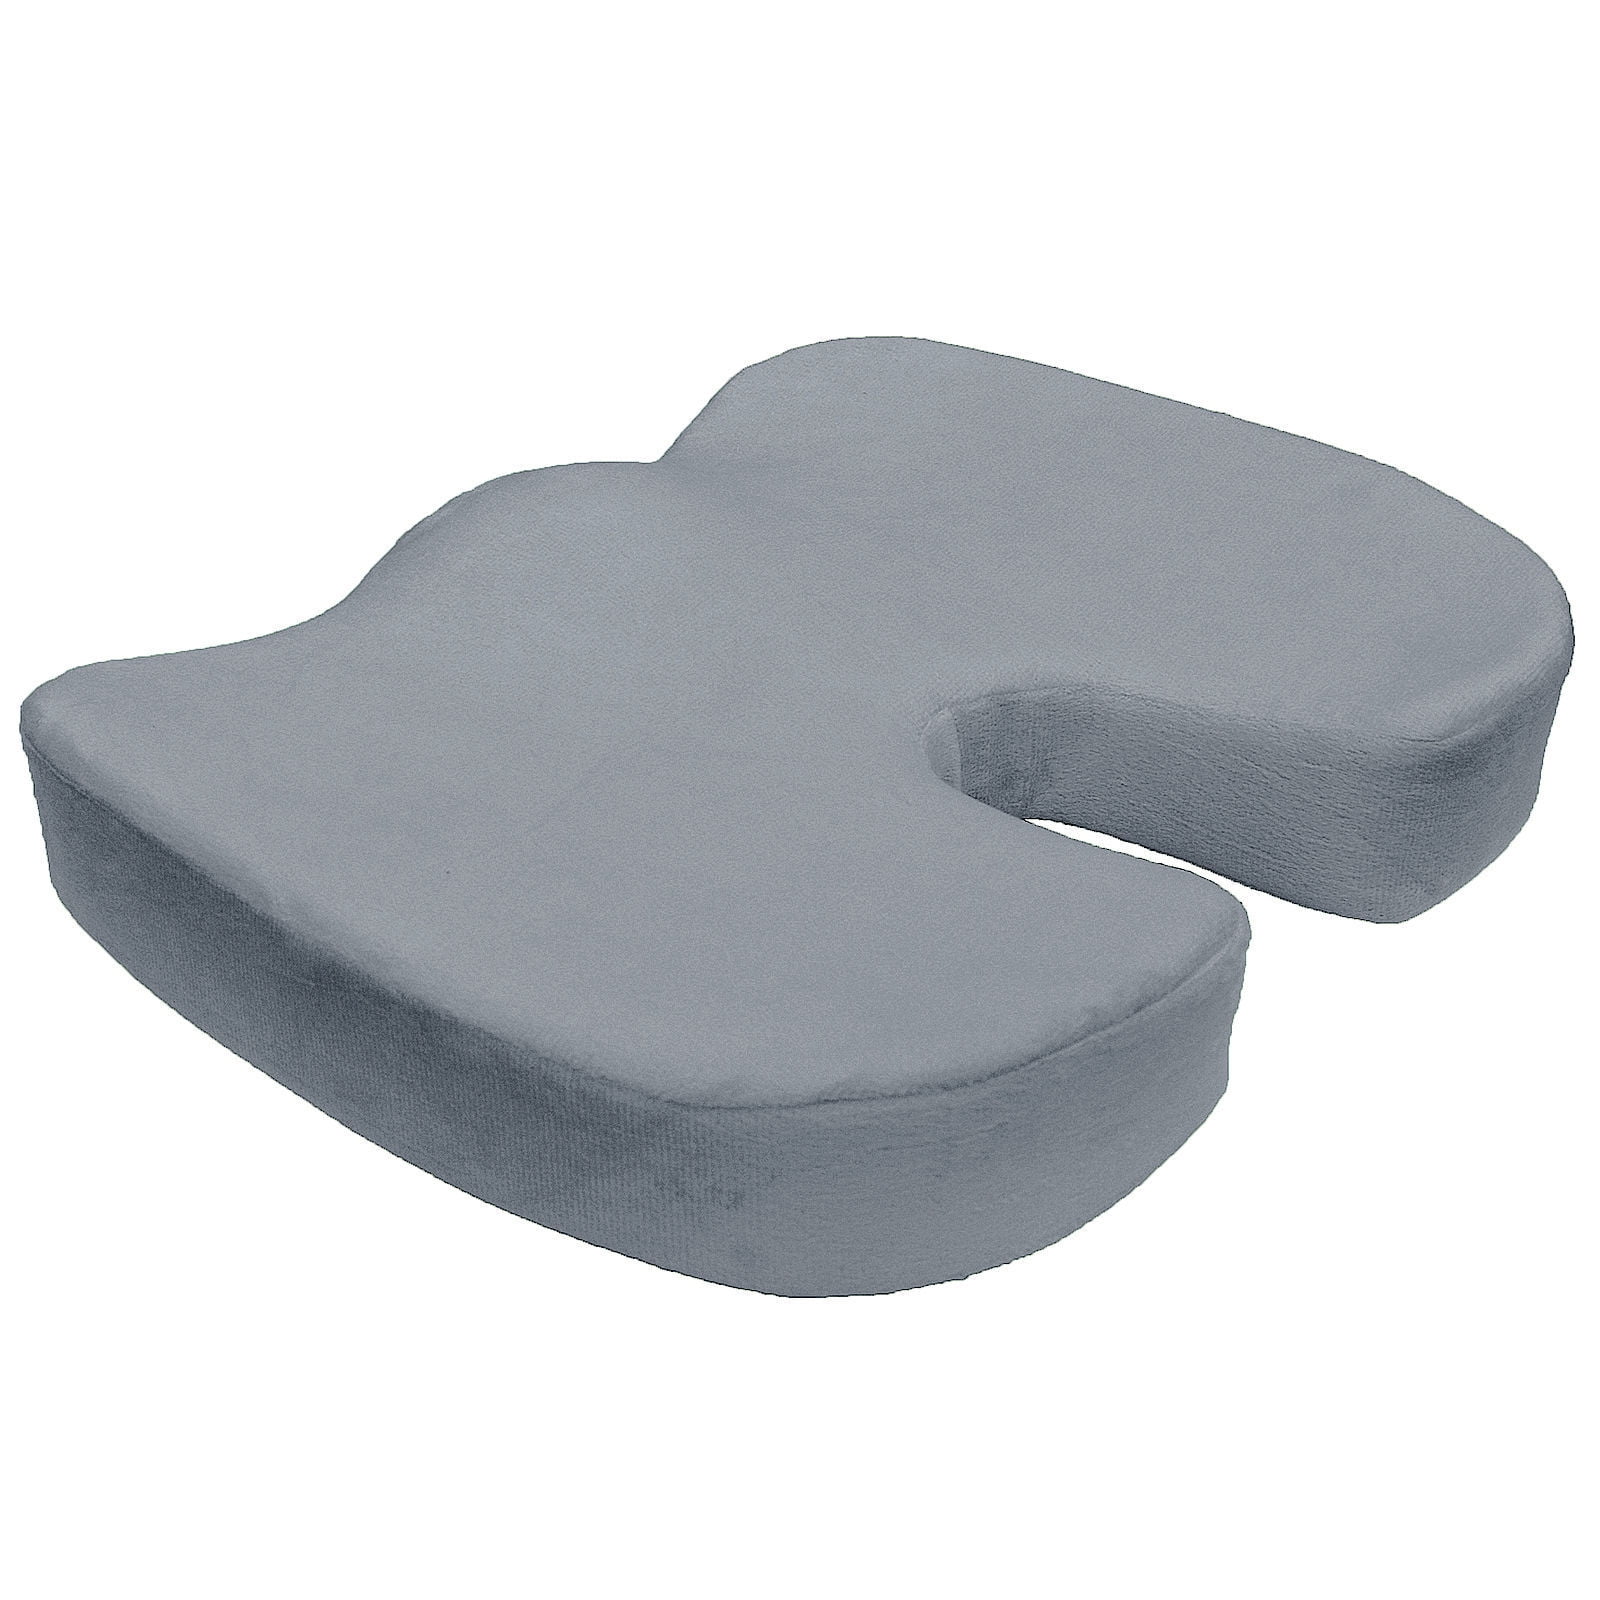 Coccyx Cushion (Memory Foam) – A-CARE